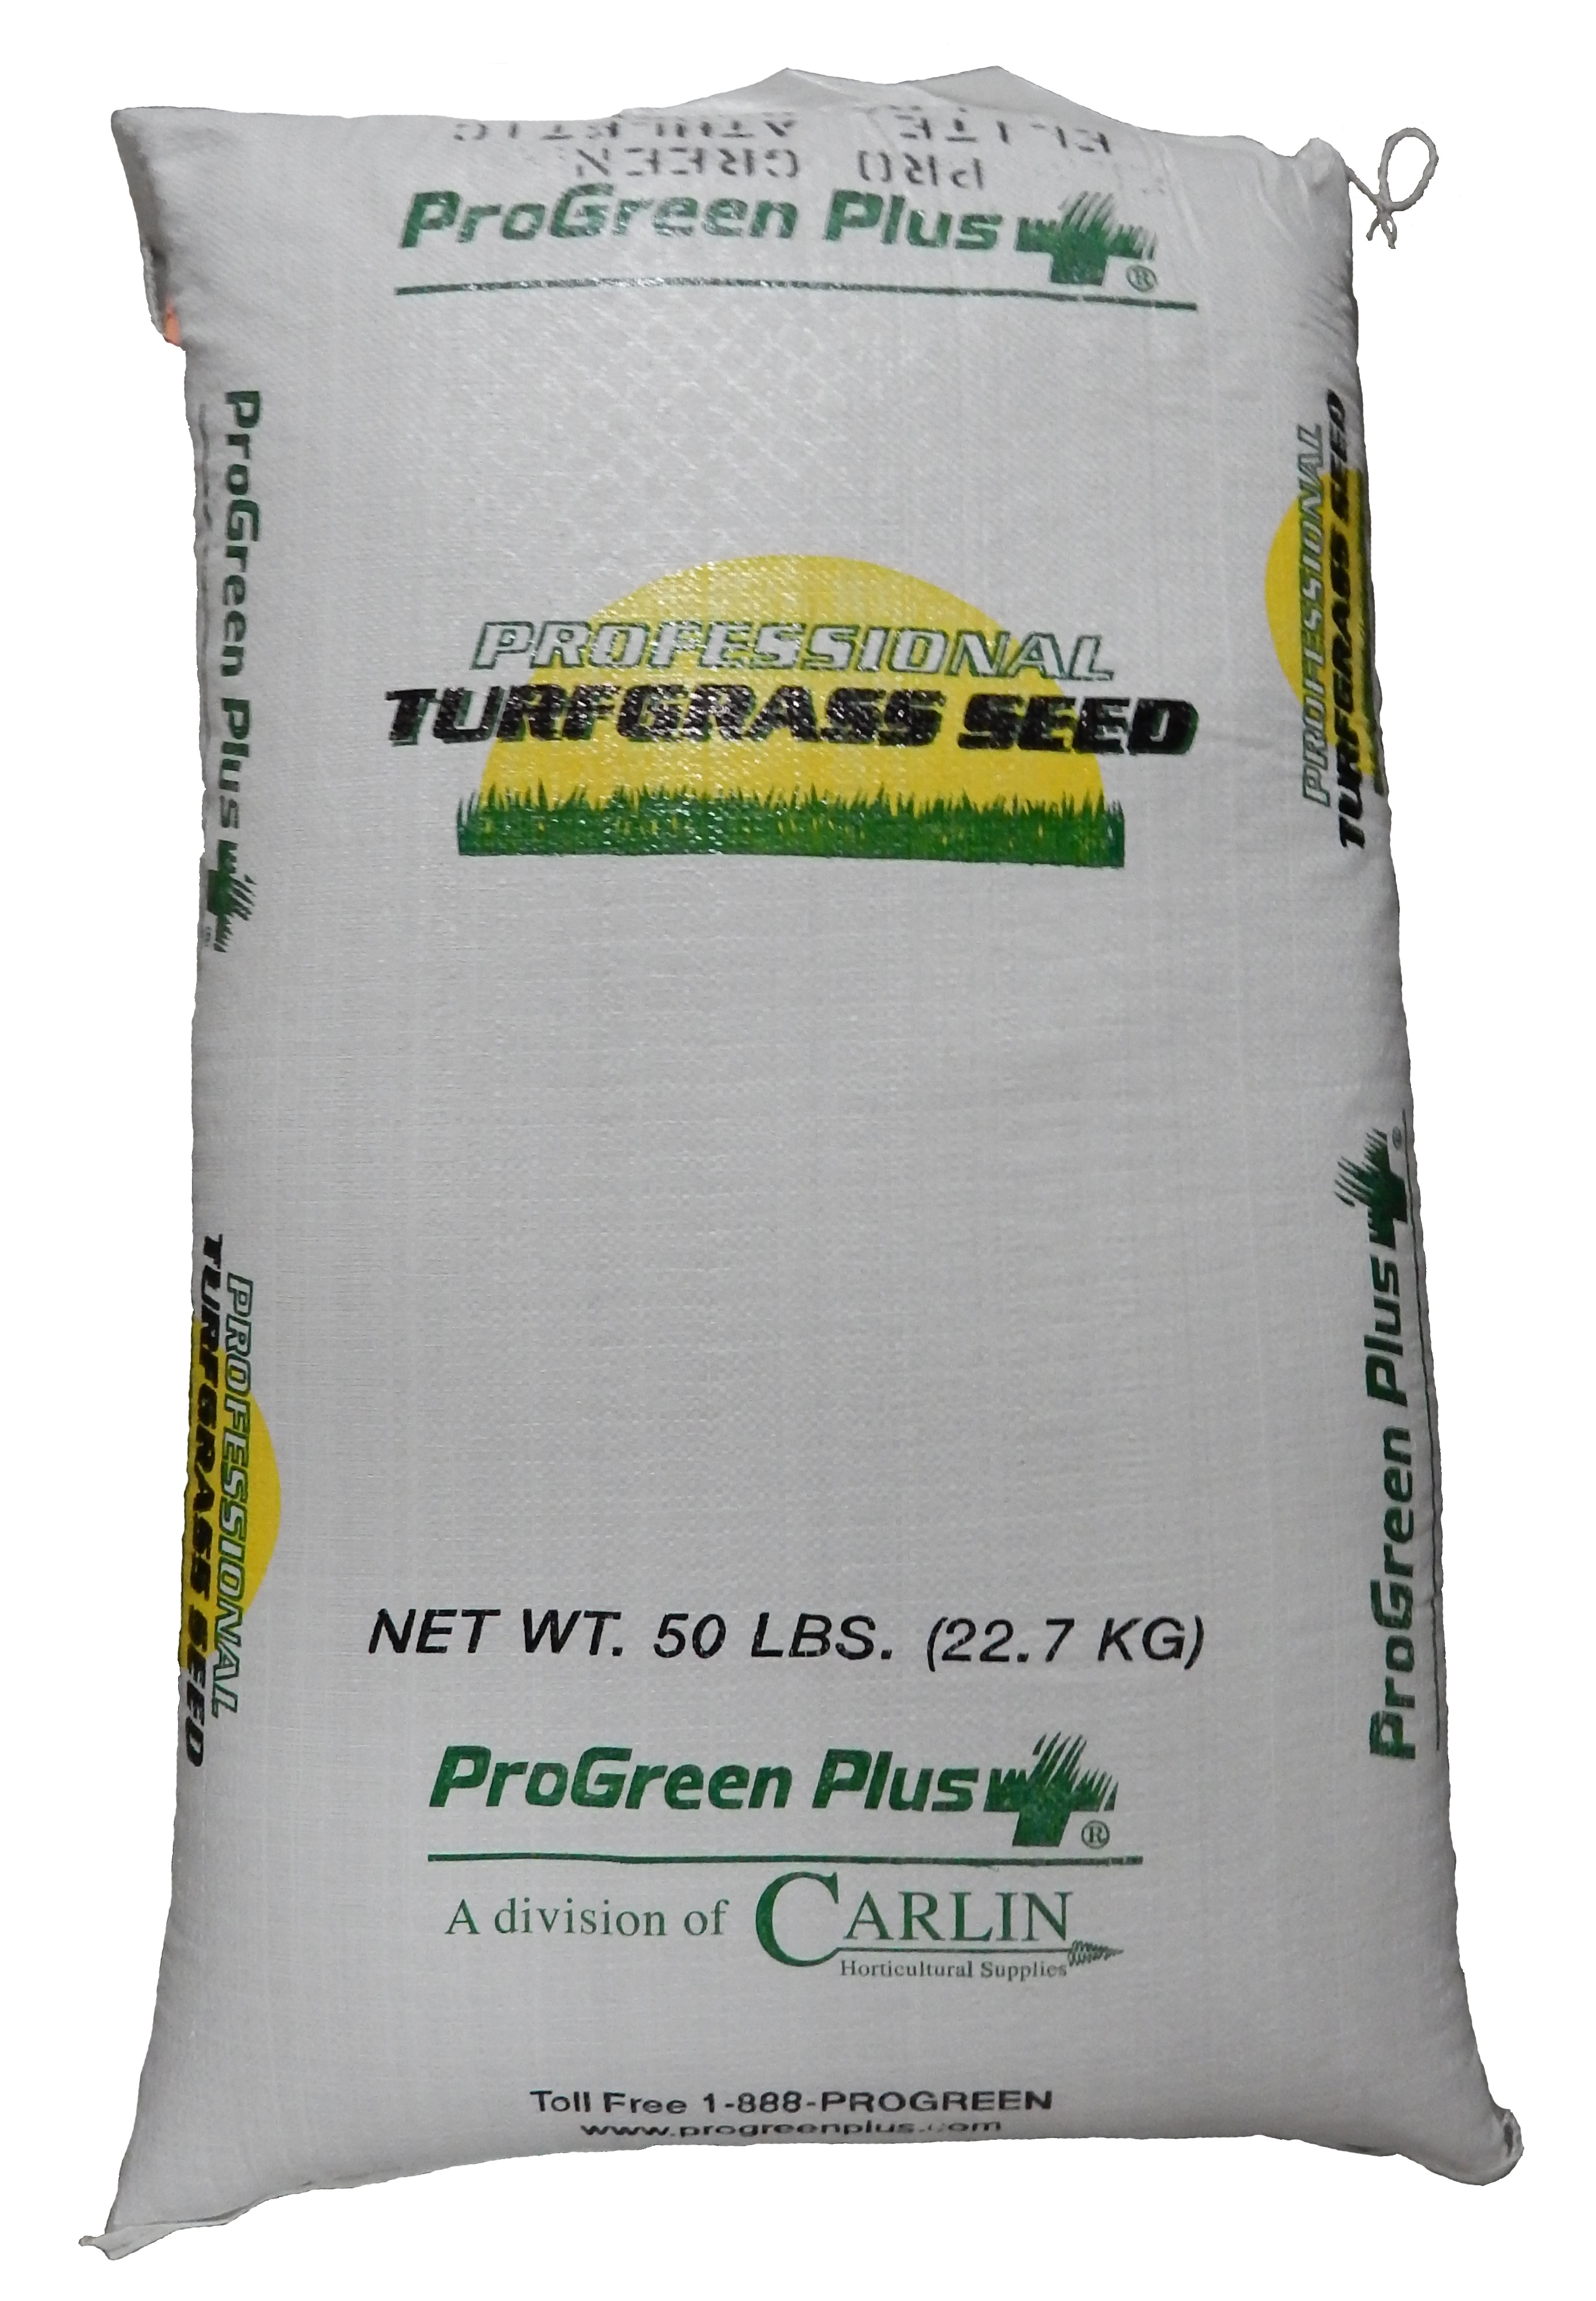 ProGreen Plus 100 Coated Seed 50 lb Bag - 40 per pallet - Turfgrass Seed